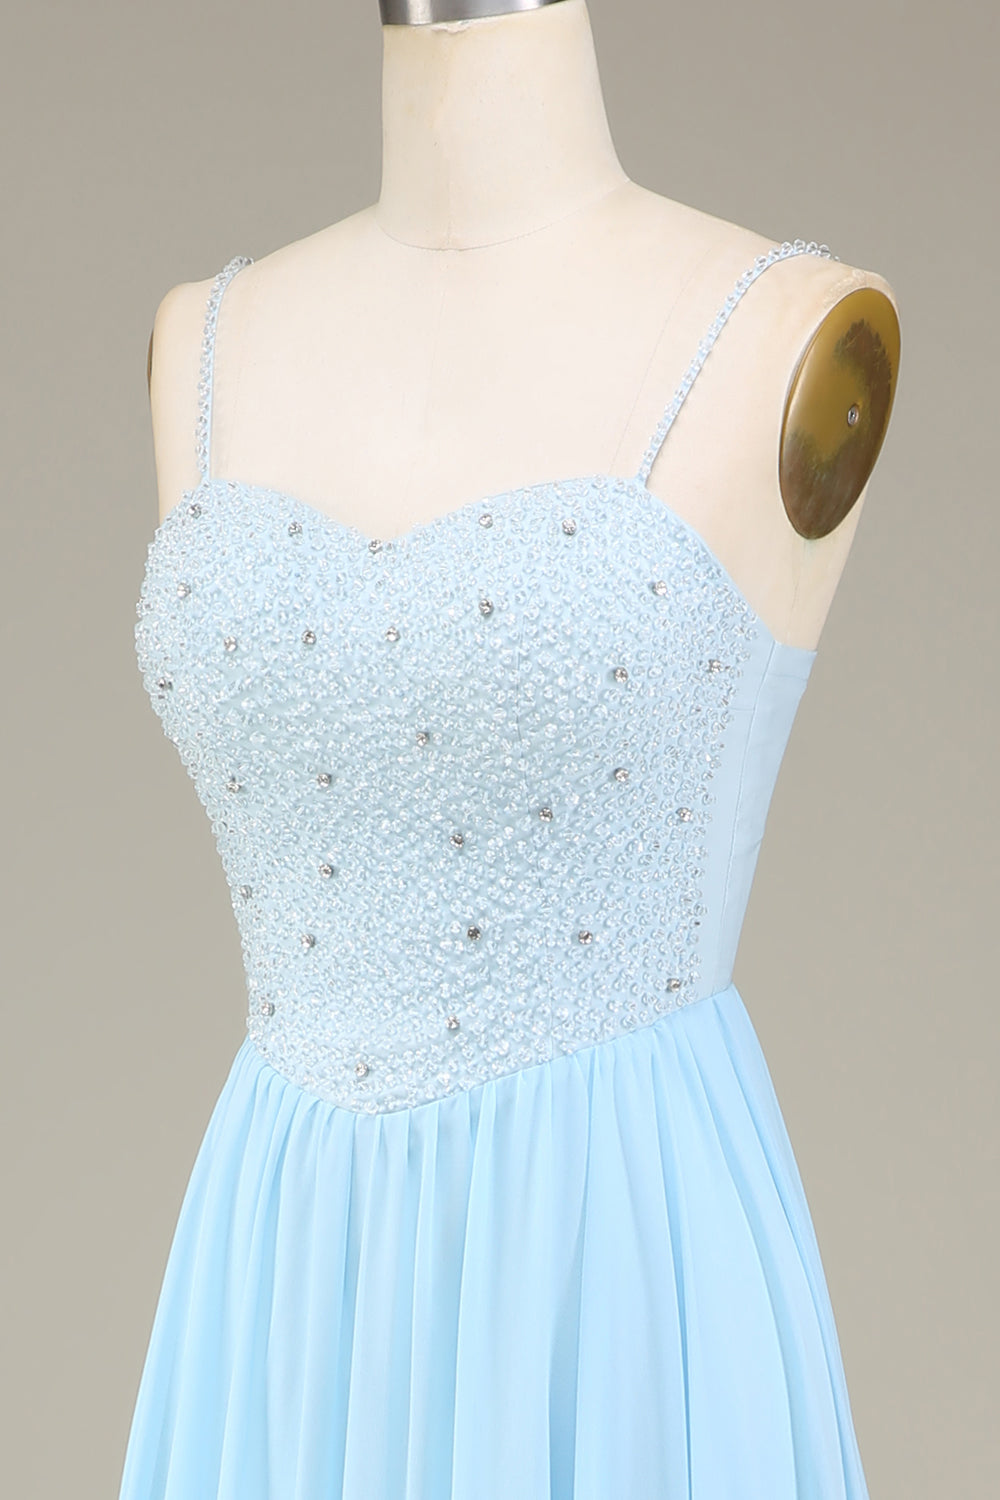 Sky Blue A-Line Spaghetti Straps Chiffon Long Bridesmaid Dress With Beading